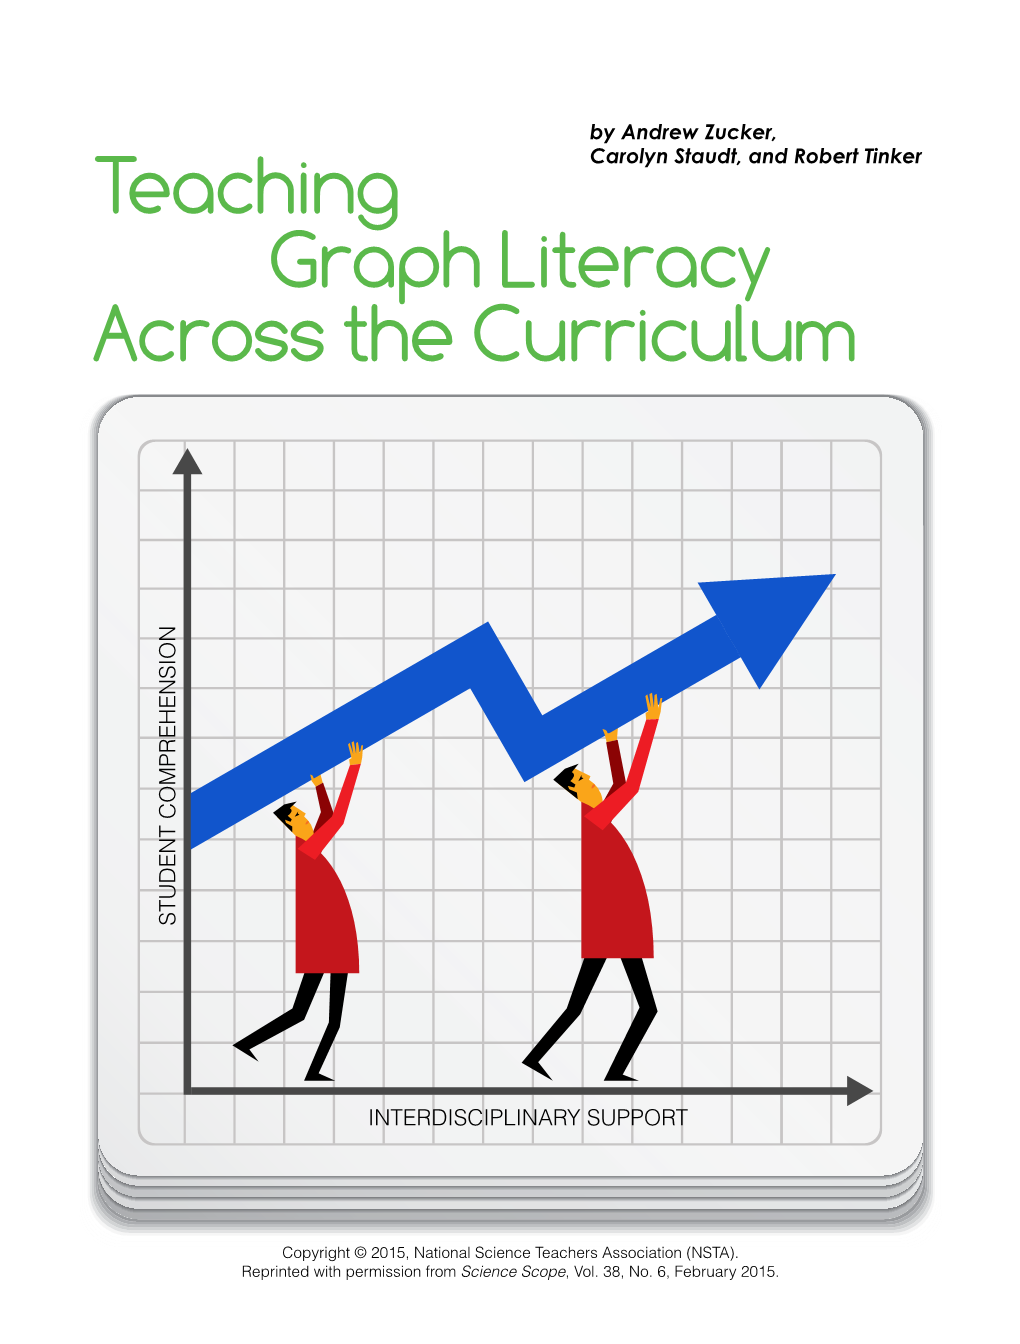 Teaching Graph Literacy Across the Curriculum